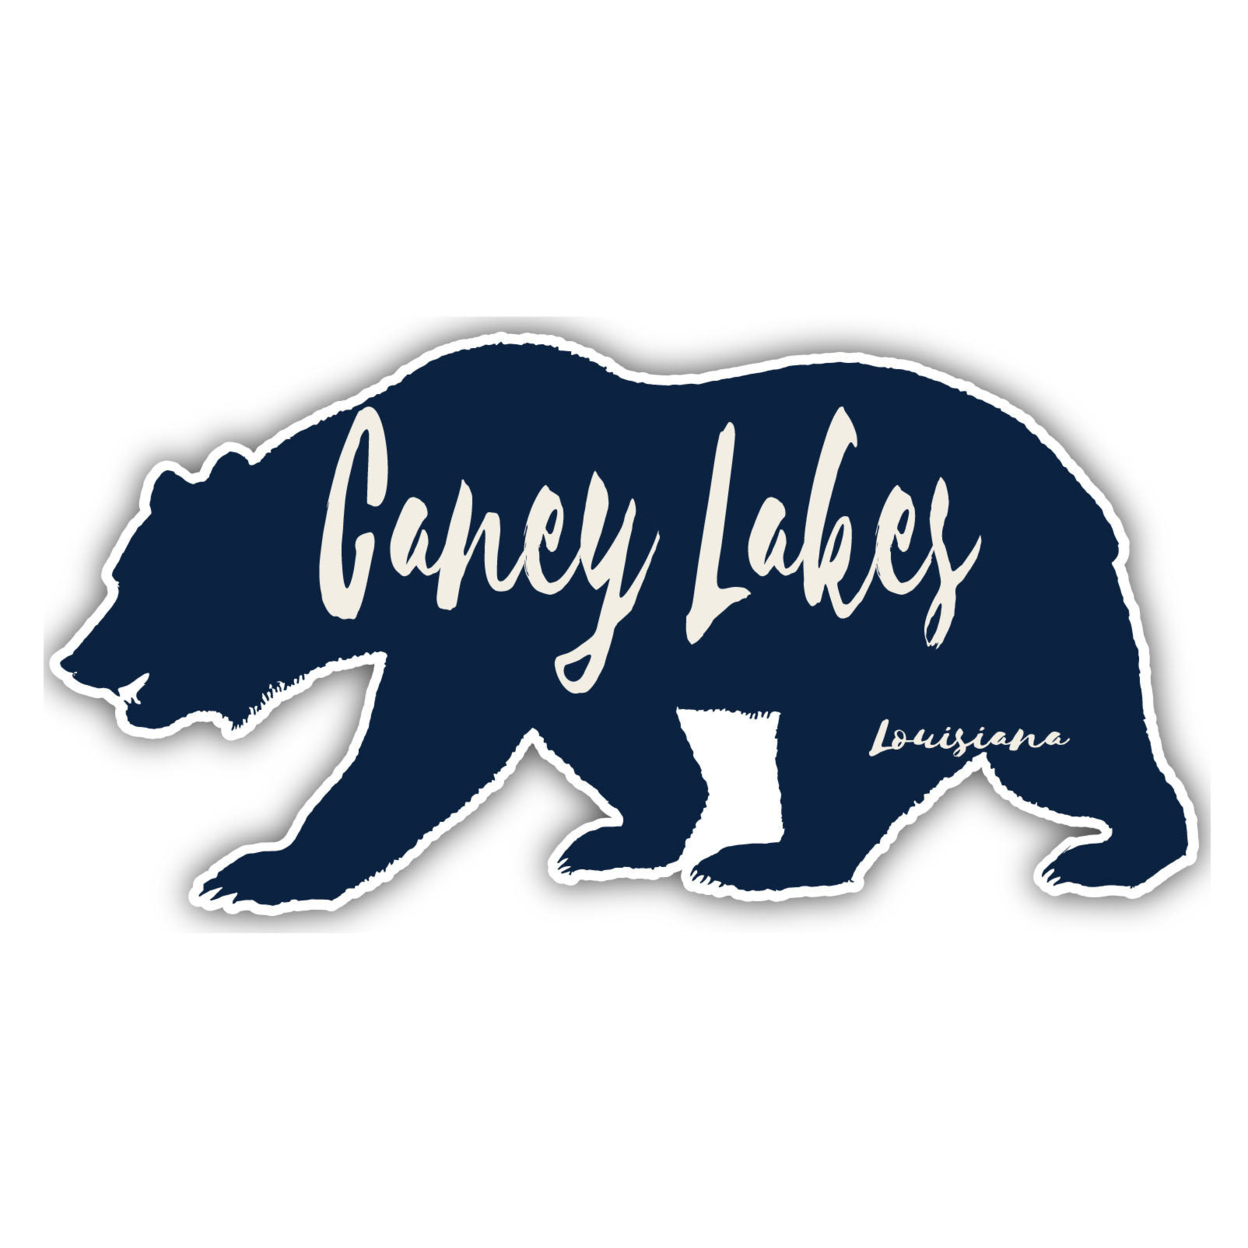 Caney Lakes Louisiana Souvenir Decorative Stickers (Choose Theme And Size) - Single Unit, 12-Inch, Bear